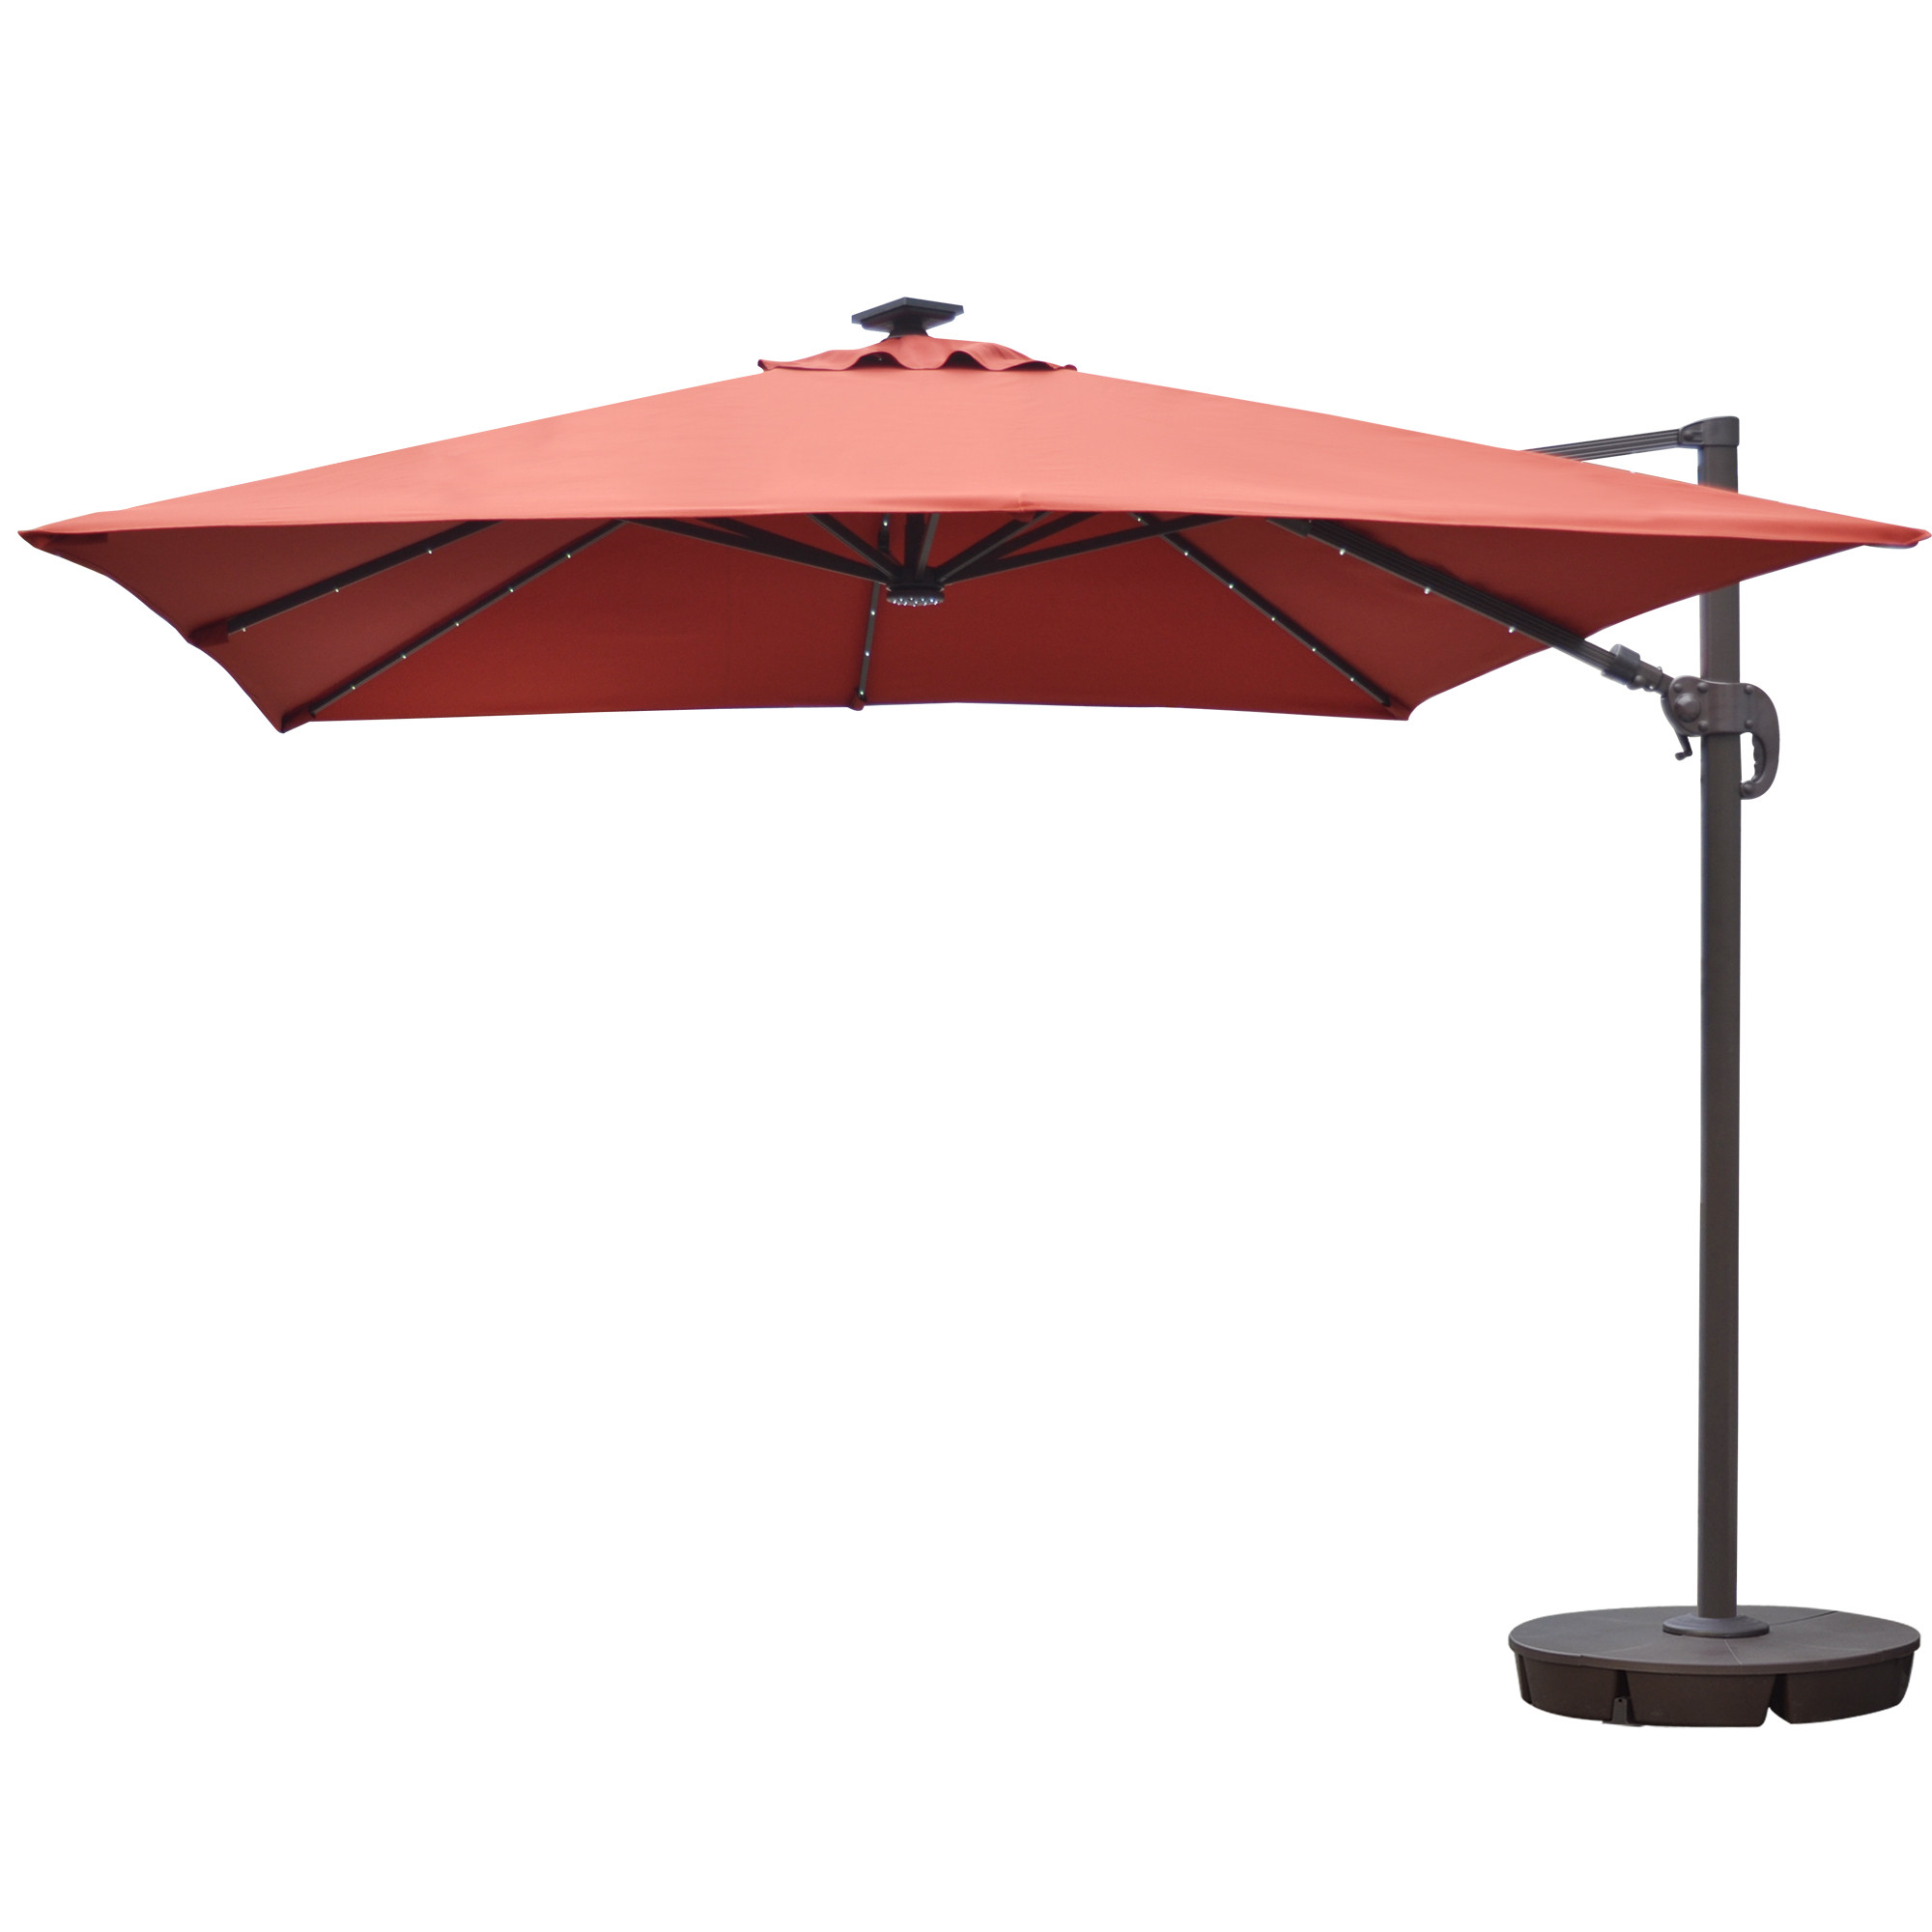 Best ideas about Square Patio Umbrella
. Save or Pin Island Umbrella Santorini II Fiesta 10 ft Square Now.